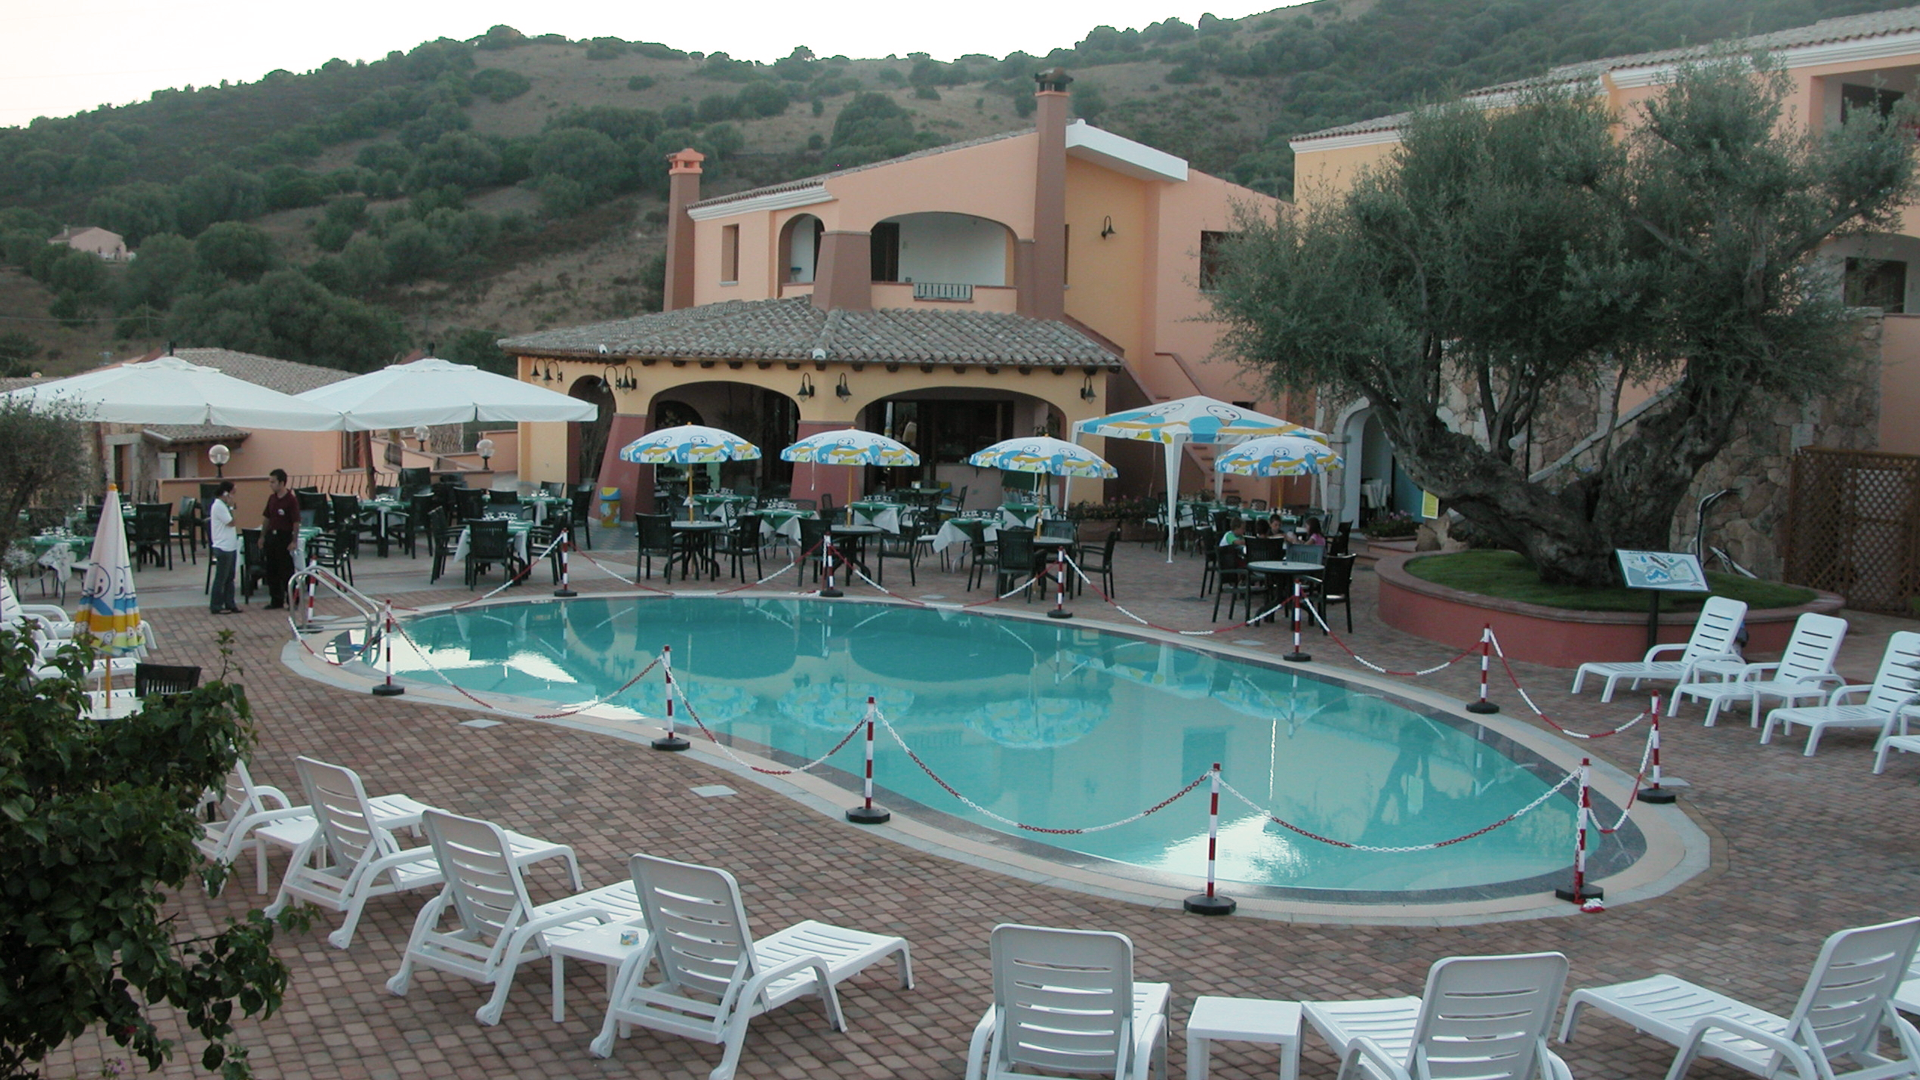 Swimmingpool på Feriebolig Li Troni Residence - Sardinien, Italien - Kulturrejser